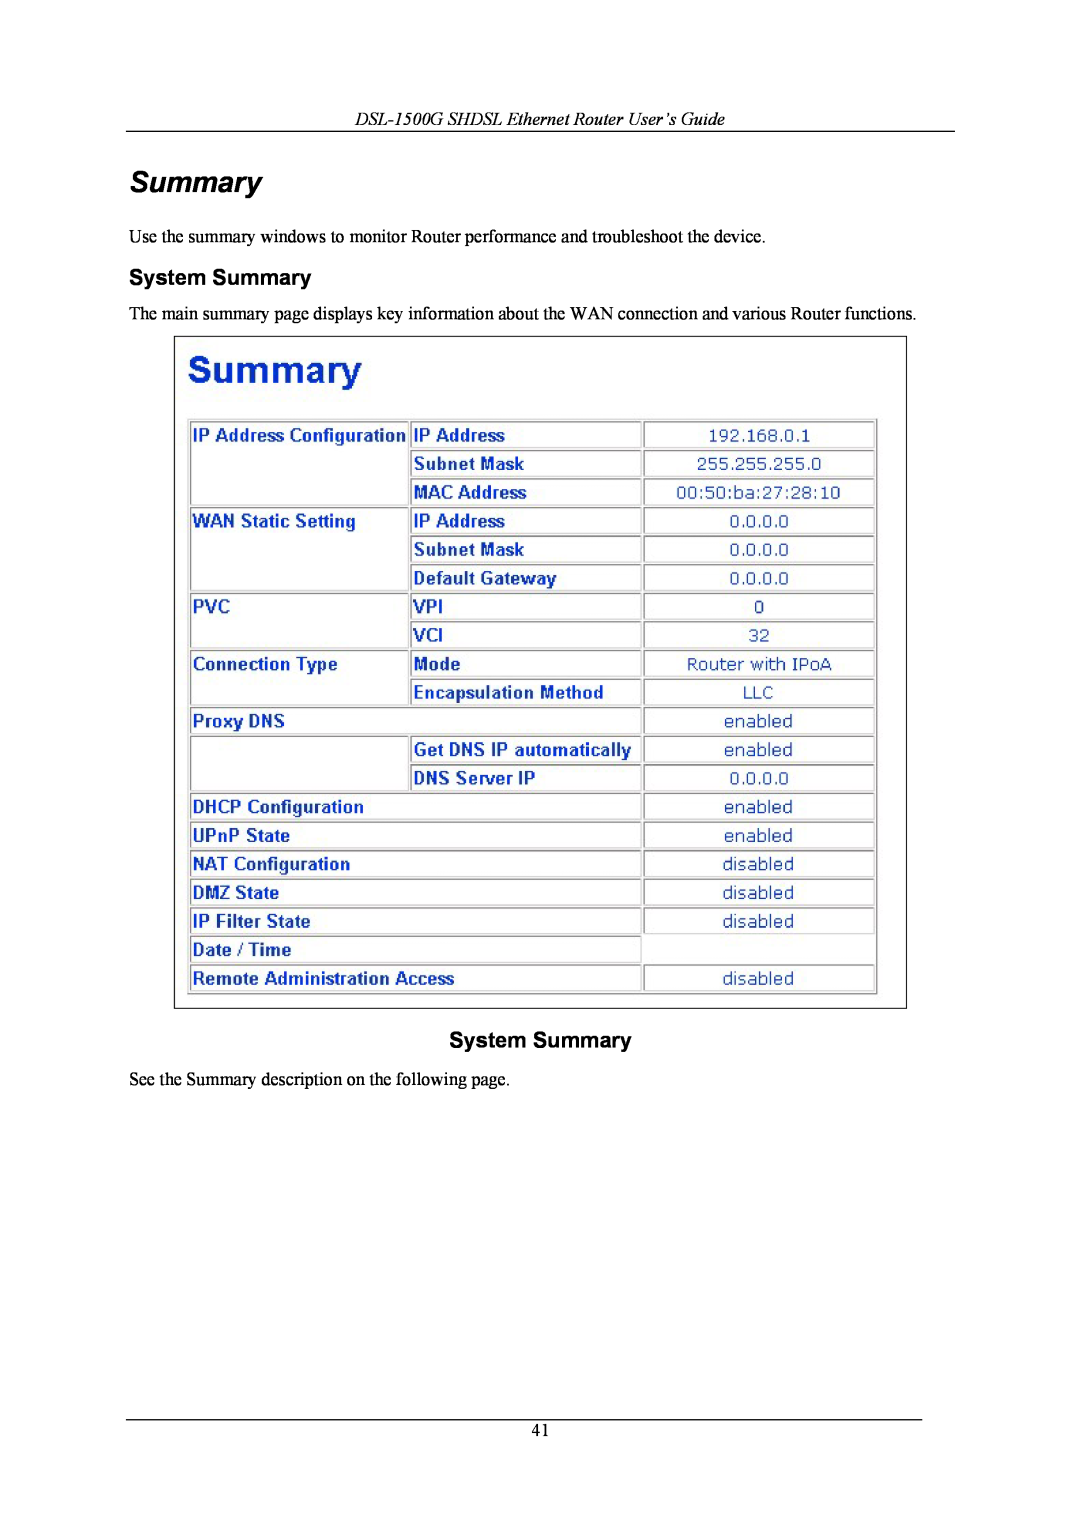 D-Link manual System Summary, DSL-1500G SHDSL Ethernet Router User’s Guide 